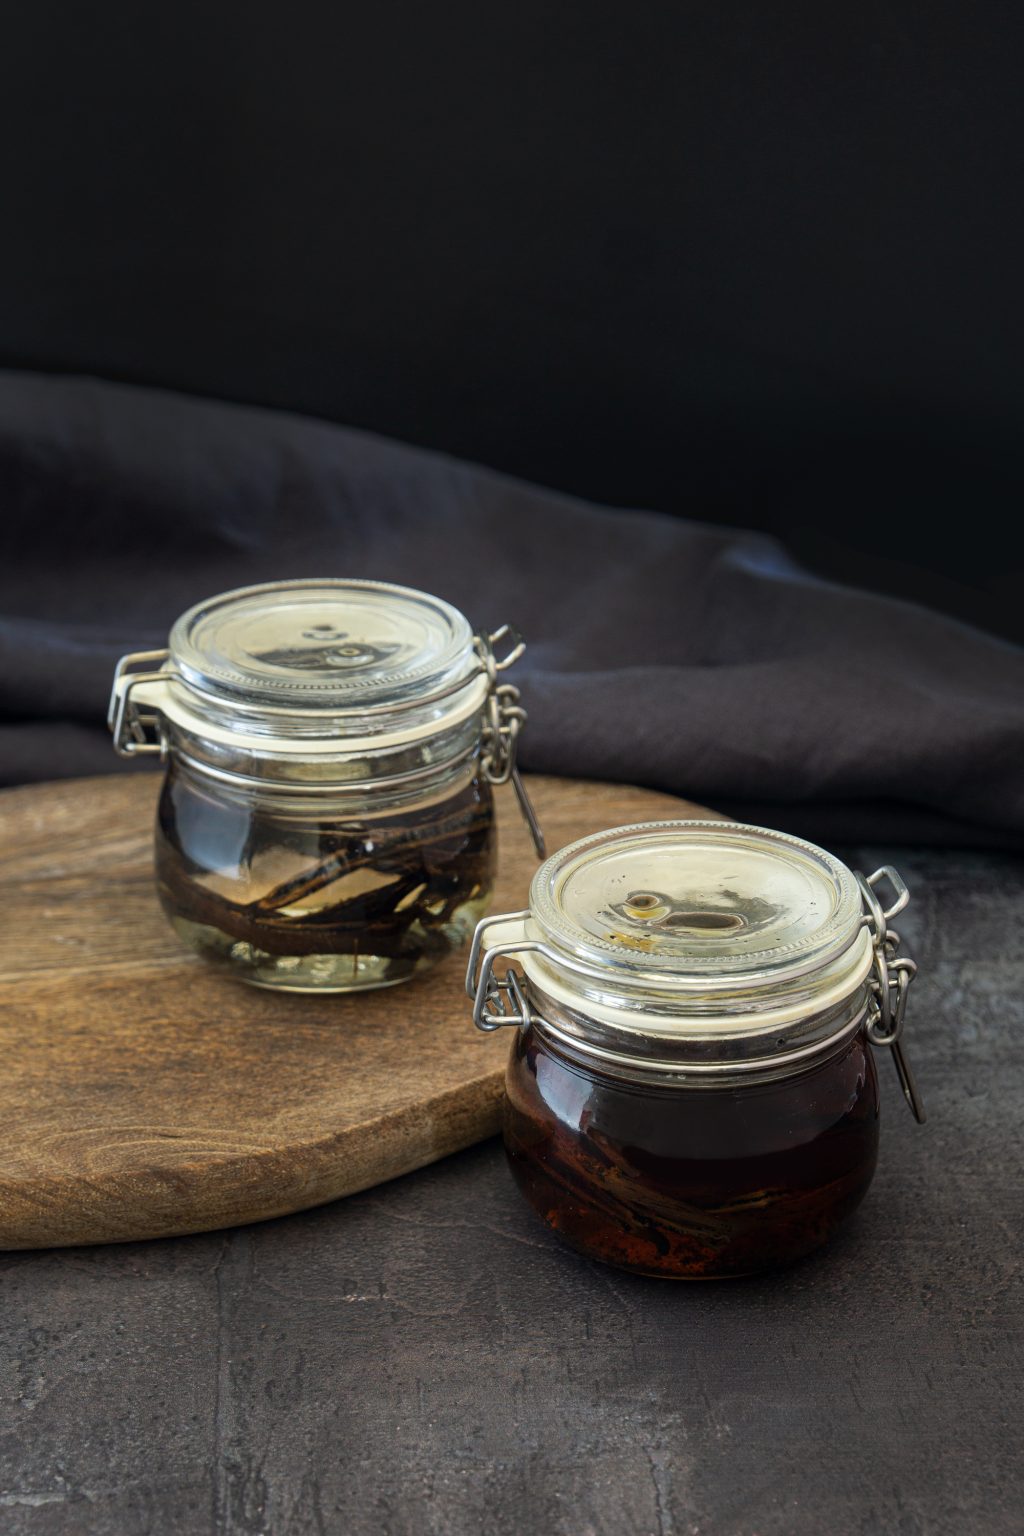 Homemade vanilla extract in small jars